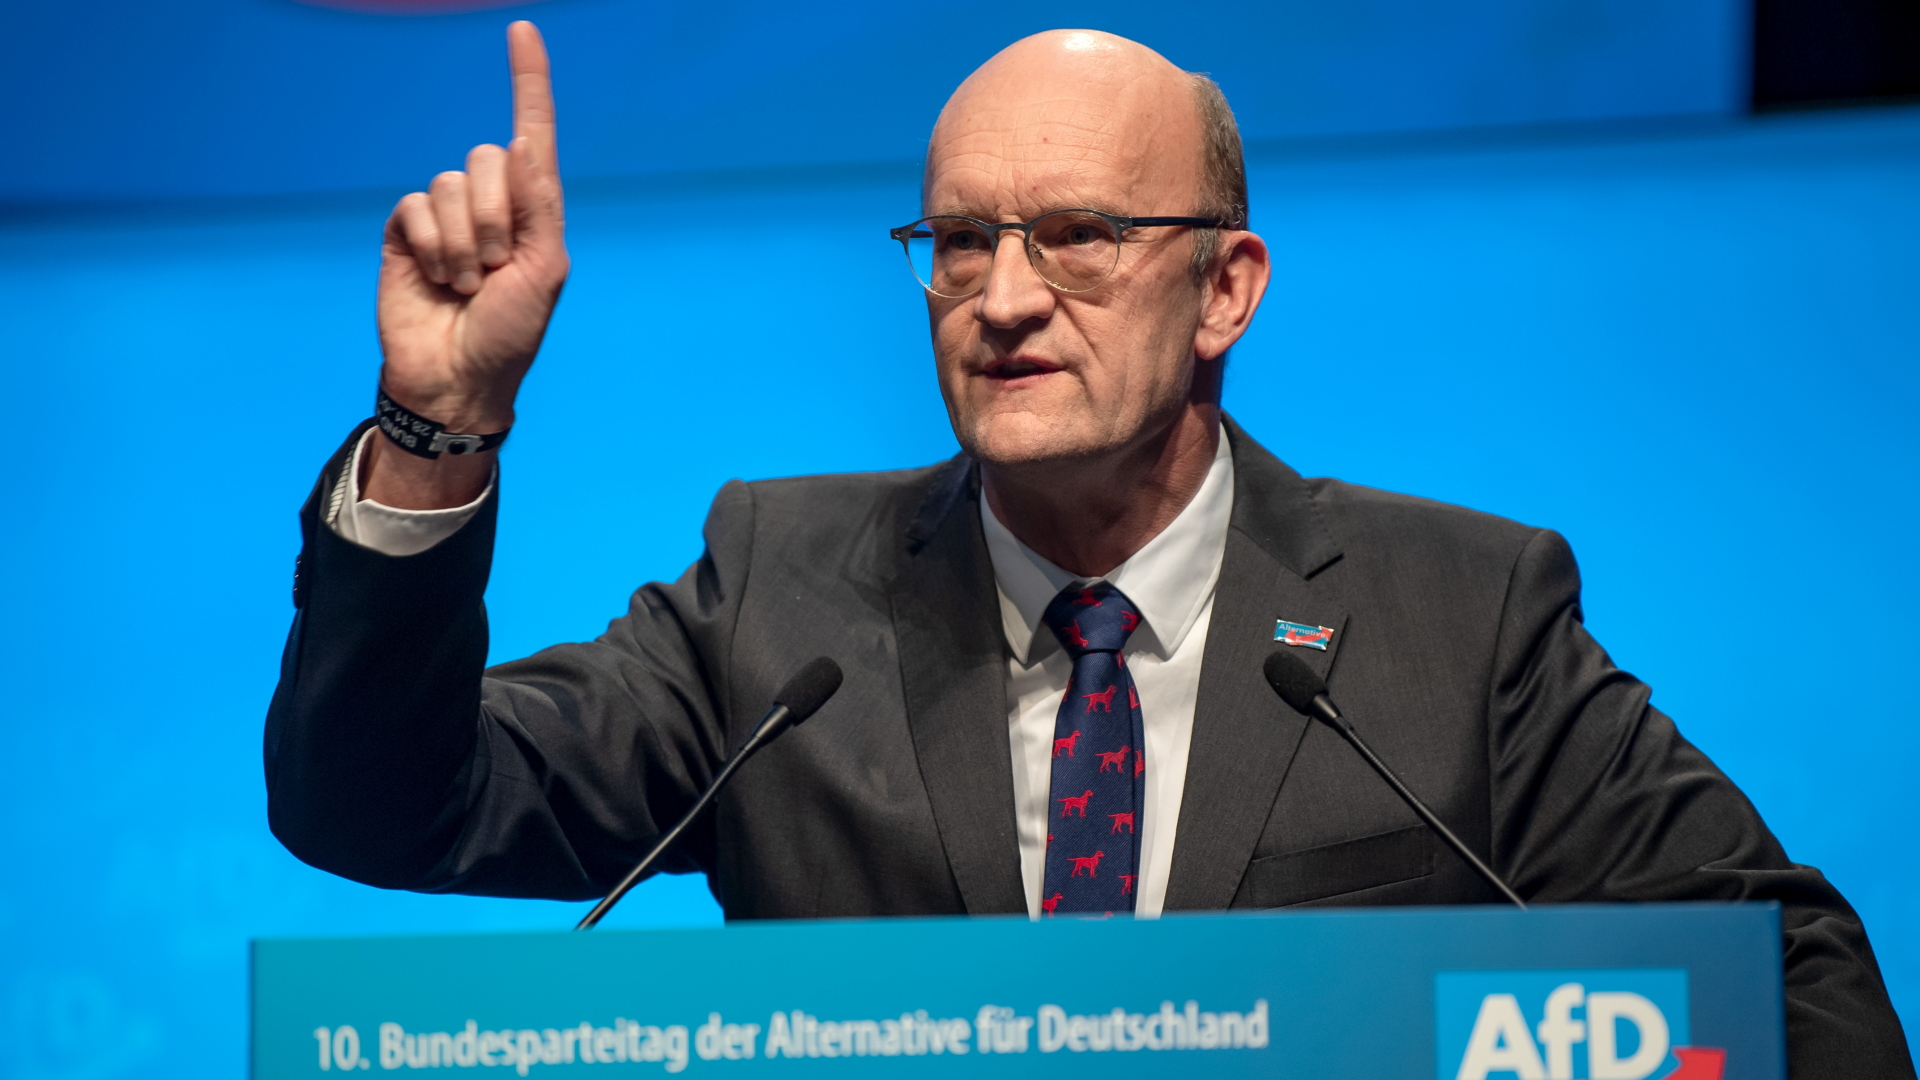 Frank Pasemann, AfD-Bundestagsabgeordneter | dpa